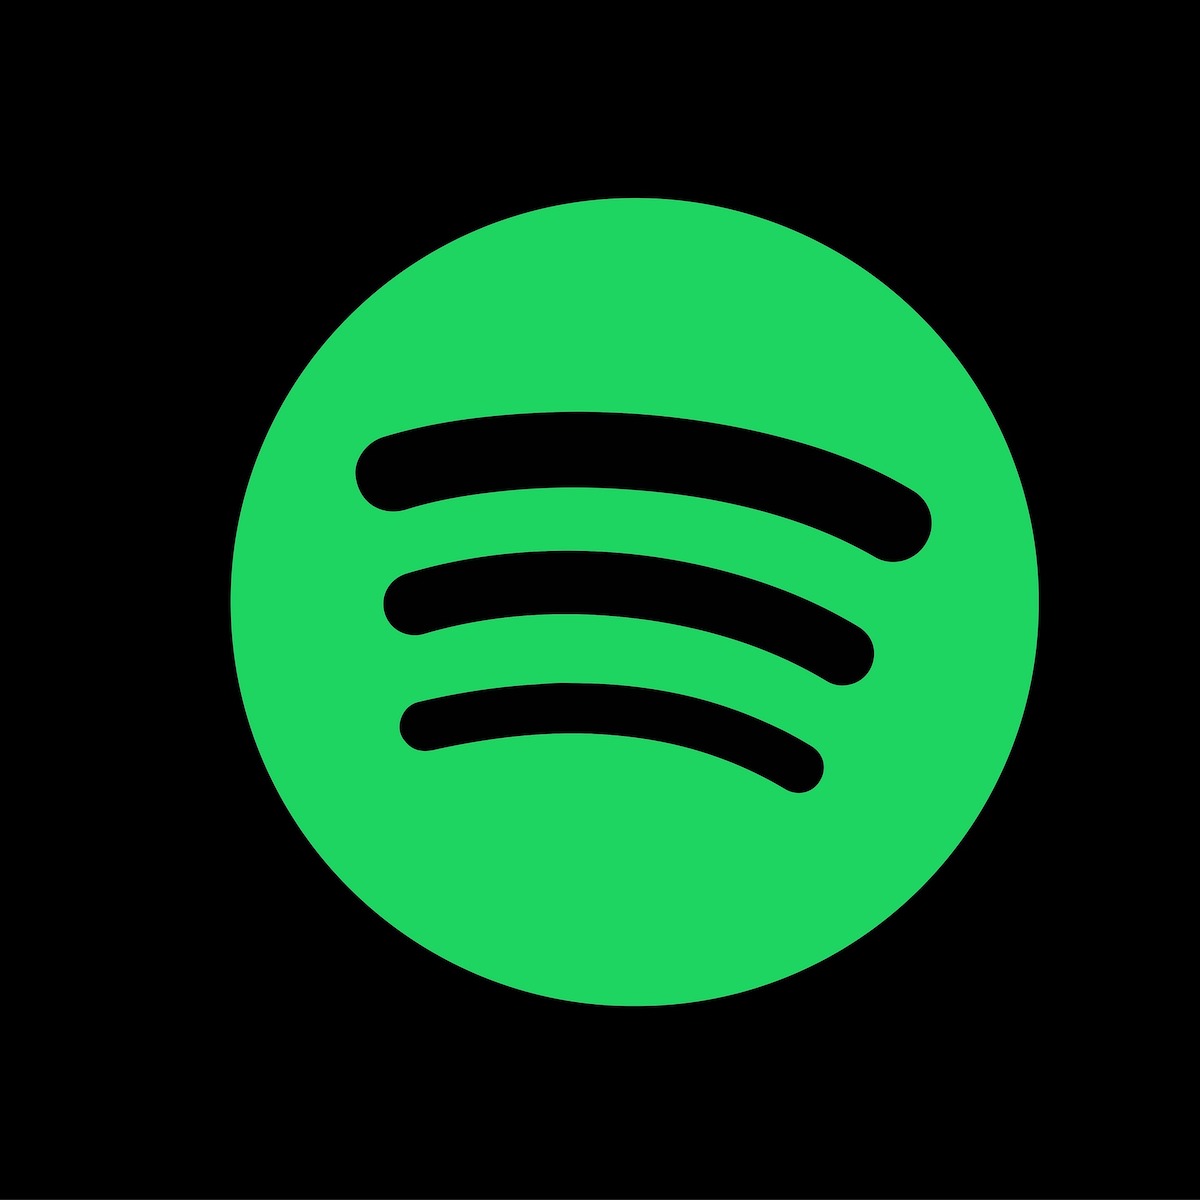 Spotifyの「インスタ楽曲シェアランキング」と若者の心情